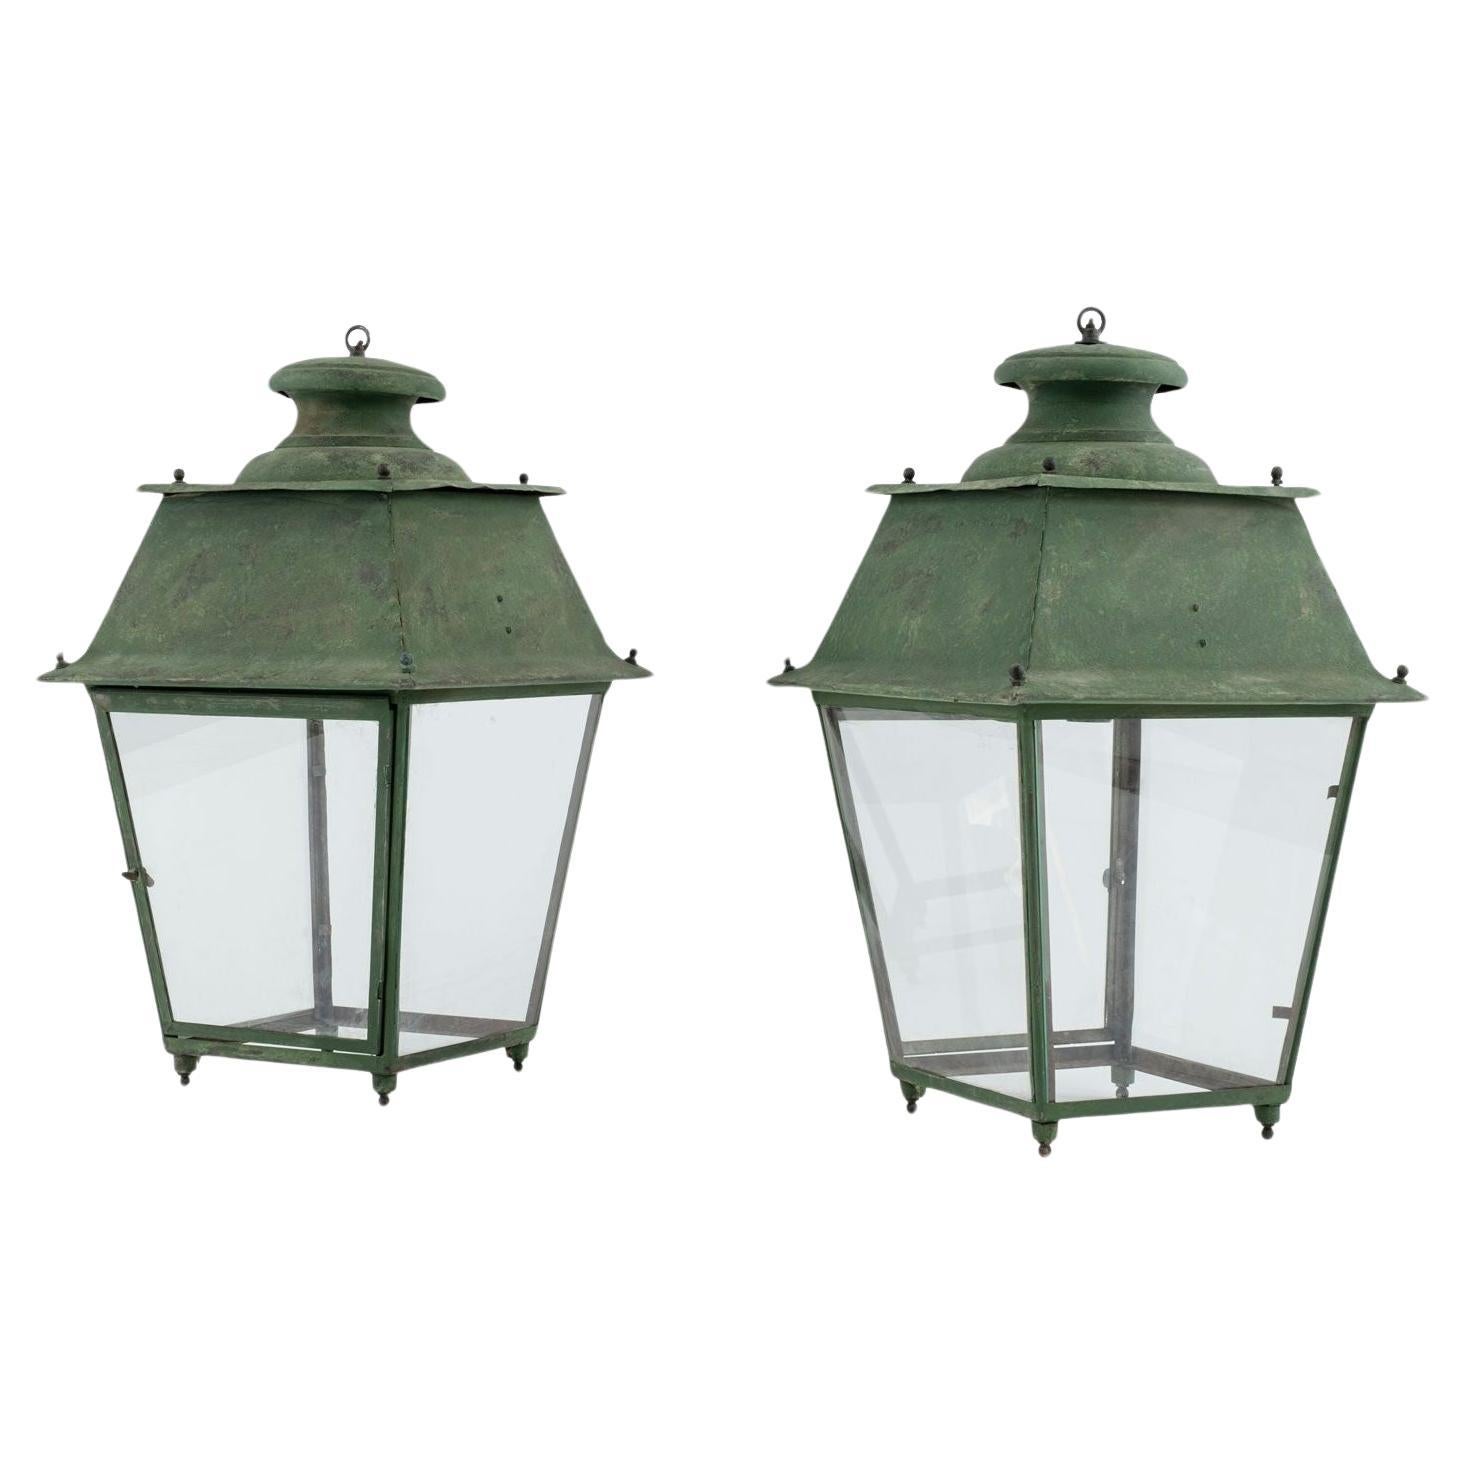 Pair of Green-Verdigris Copper French Lanterns